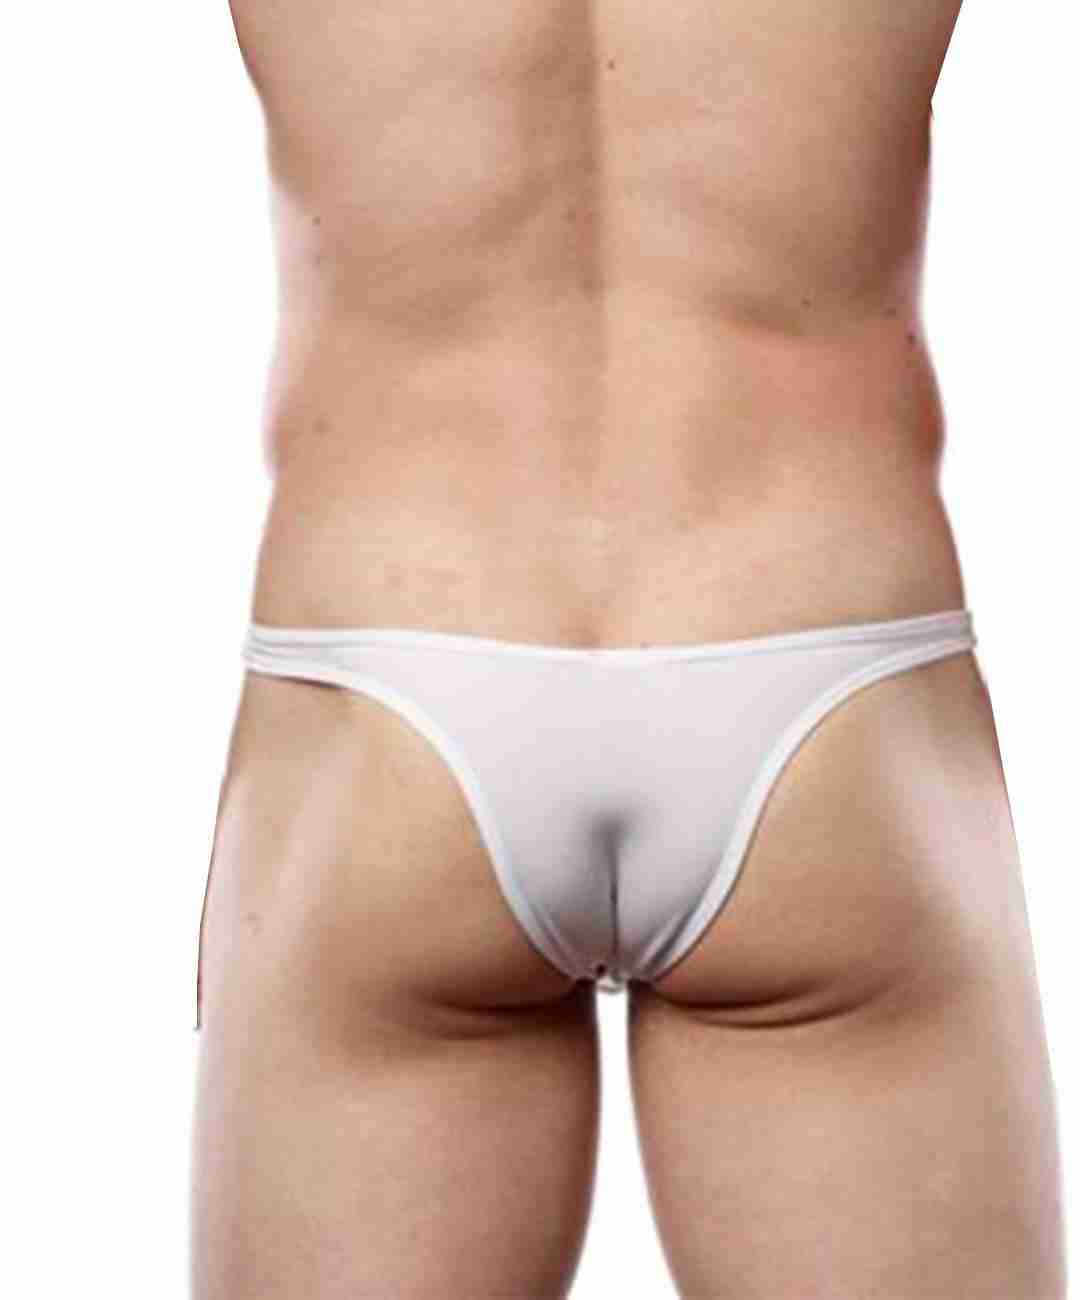 Trawee Disposable Underwear Regular Use Women Disposable White